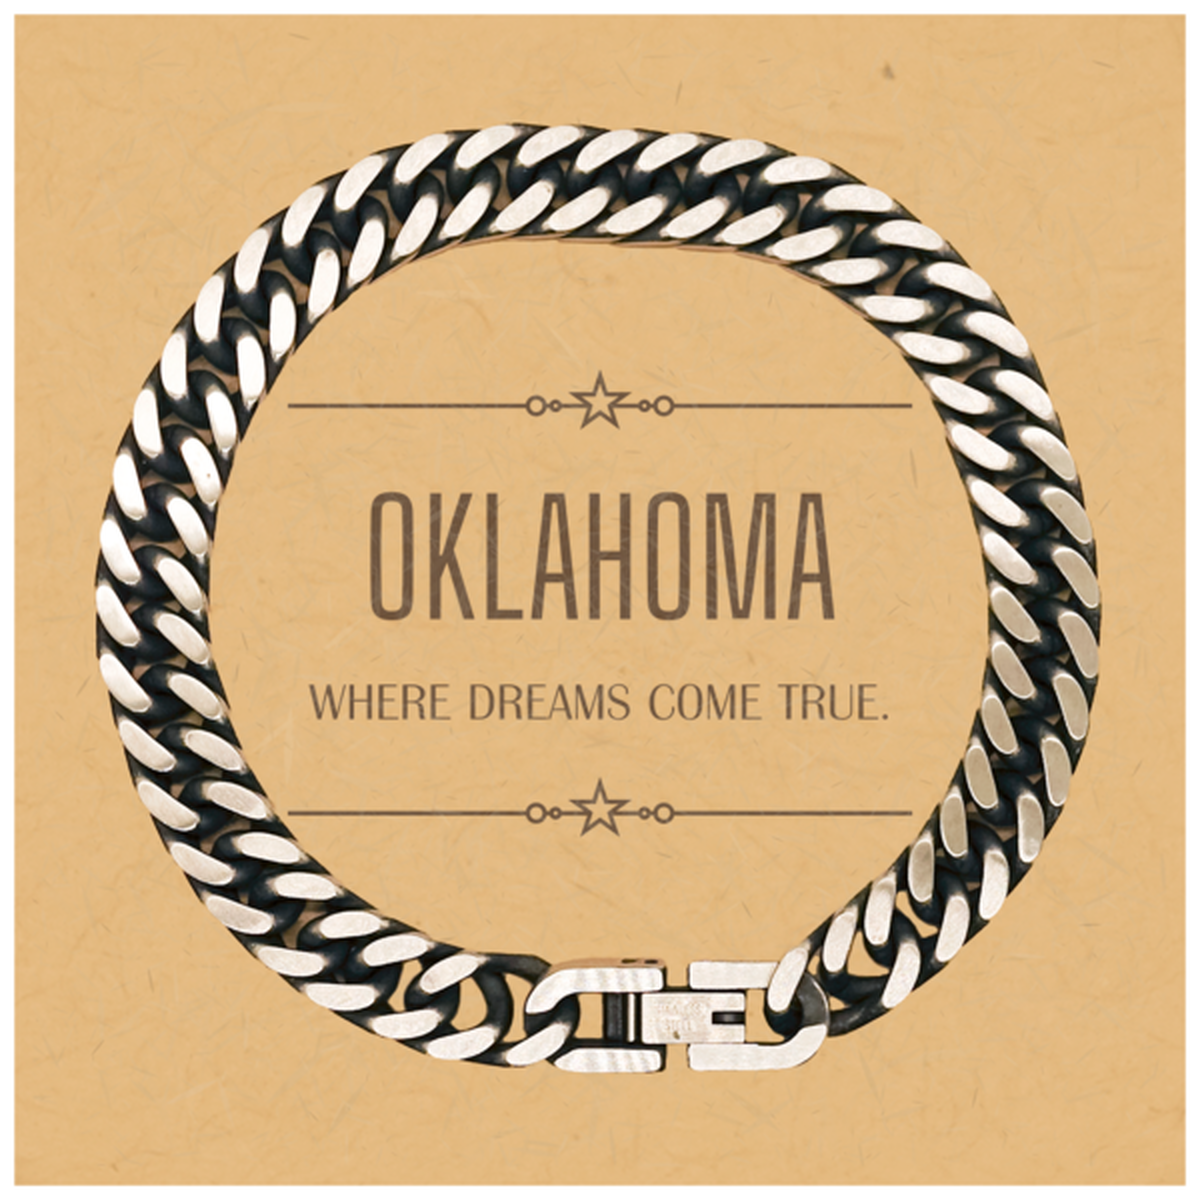 Love Oklahoma State Cuban Link Chain Bracelet, Oklahoma Where dreams come true, Birthday Christmas Inspirational Gifts For Oklahoma Men, Women, Friends